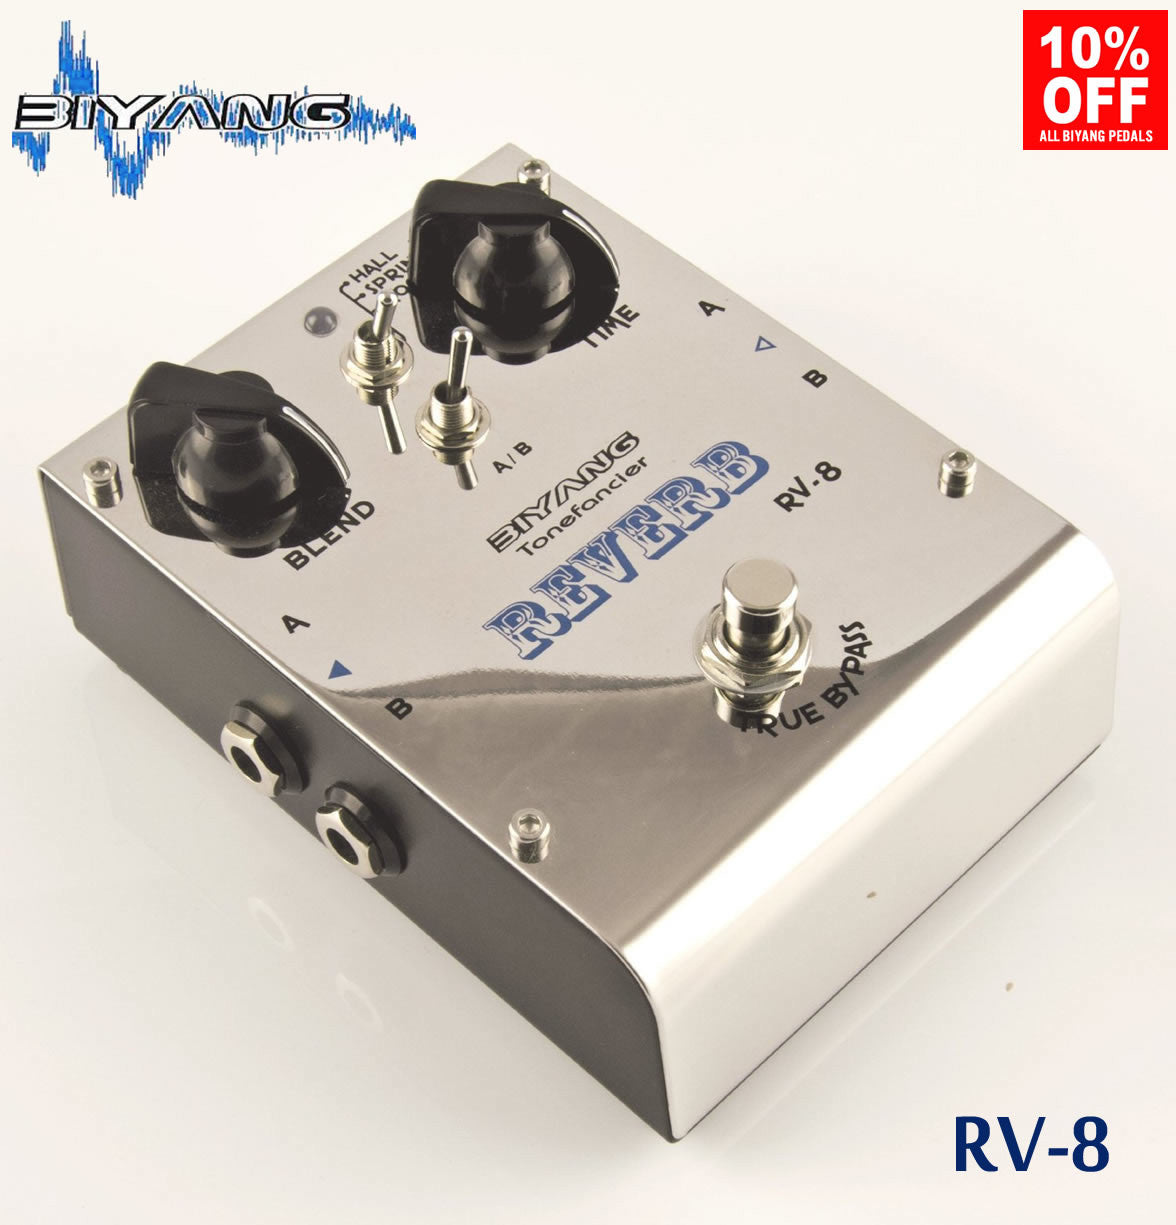 Biyang RV-8 Stereo Reverb Guitar Effect Pedal (ToneFancier Series)